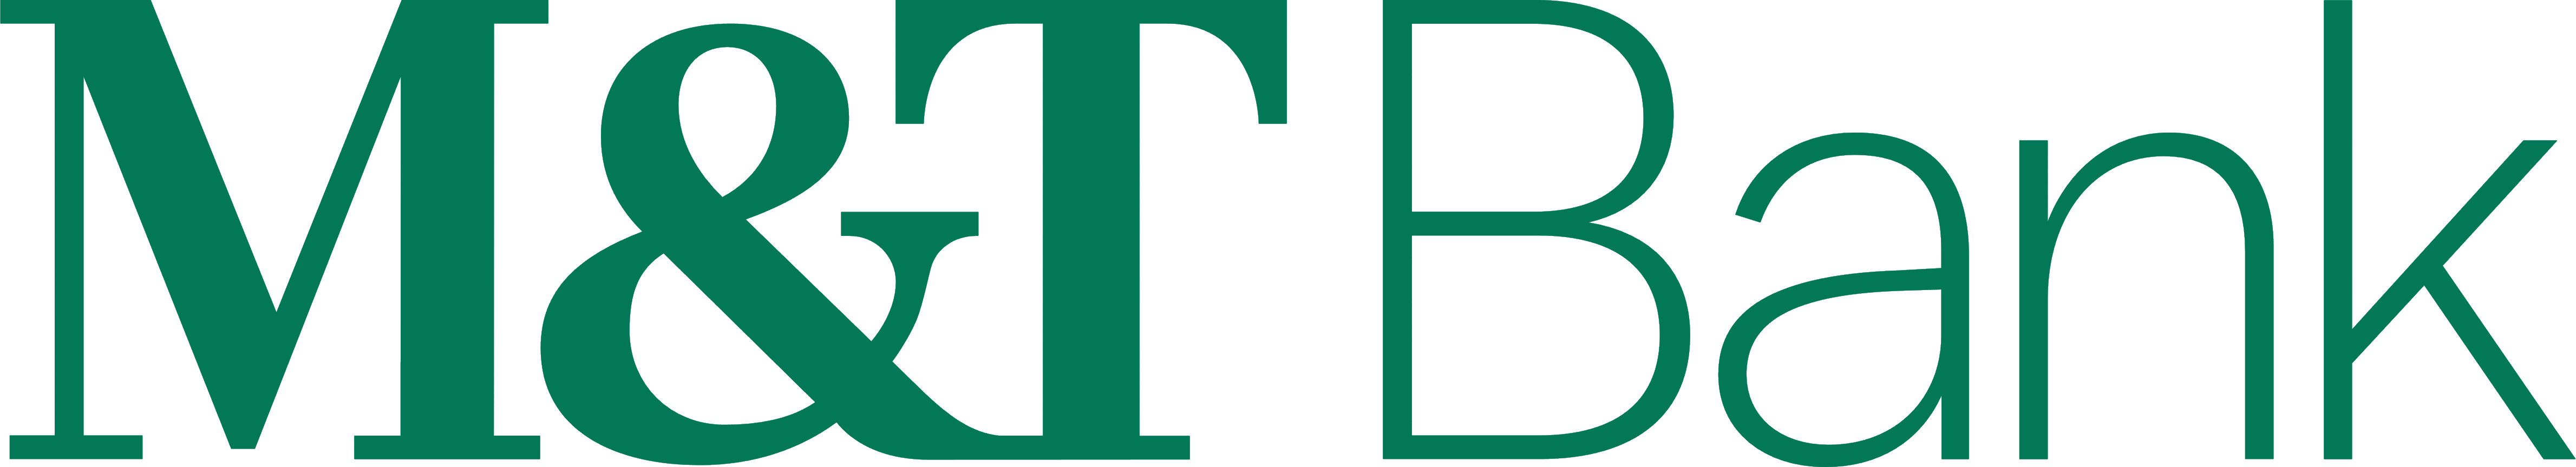 M&T Bank Brand Logo